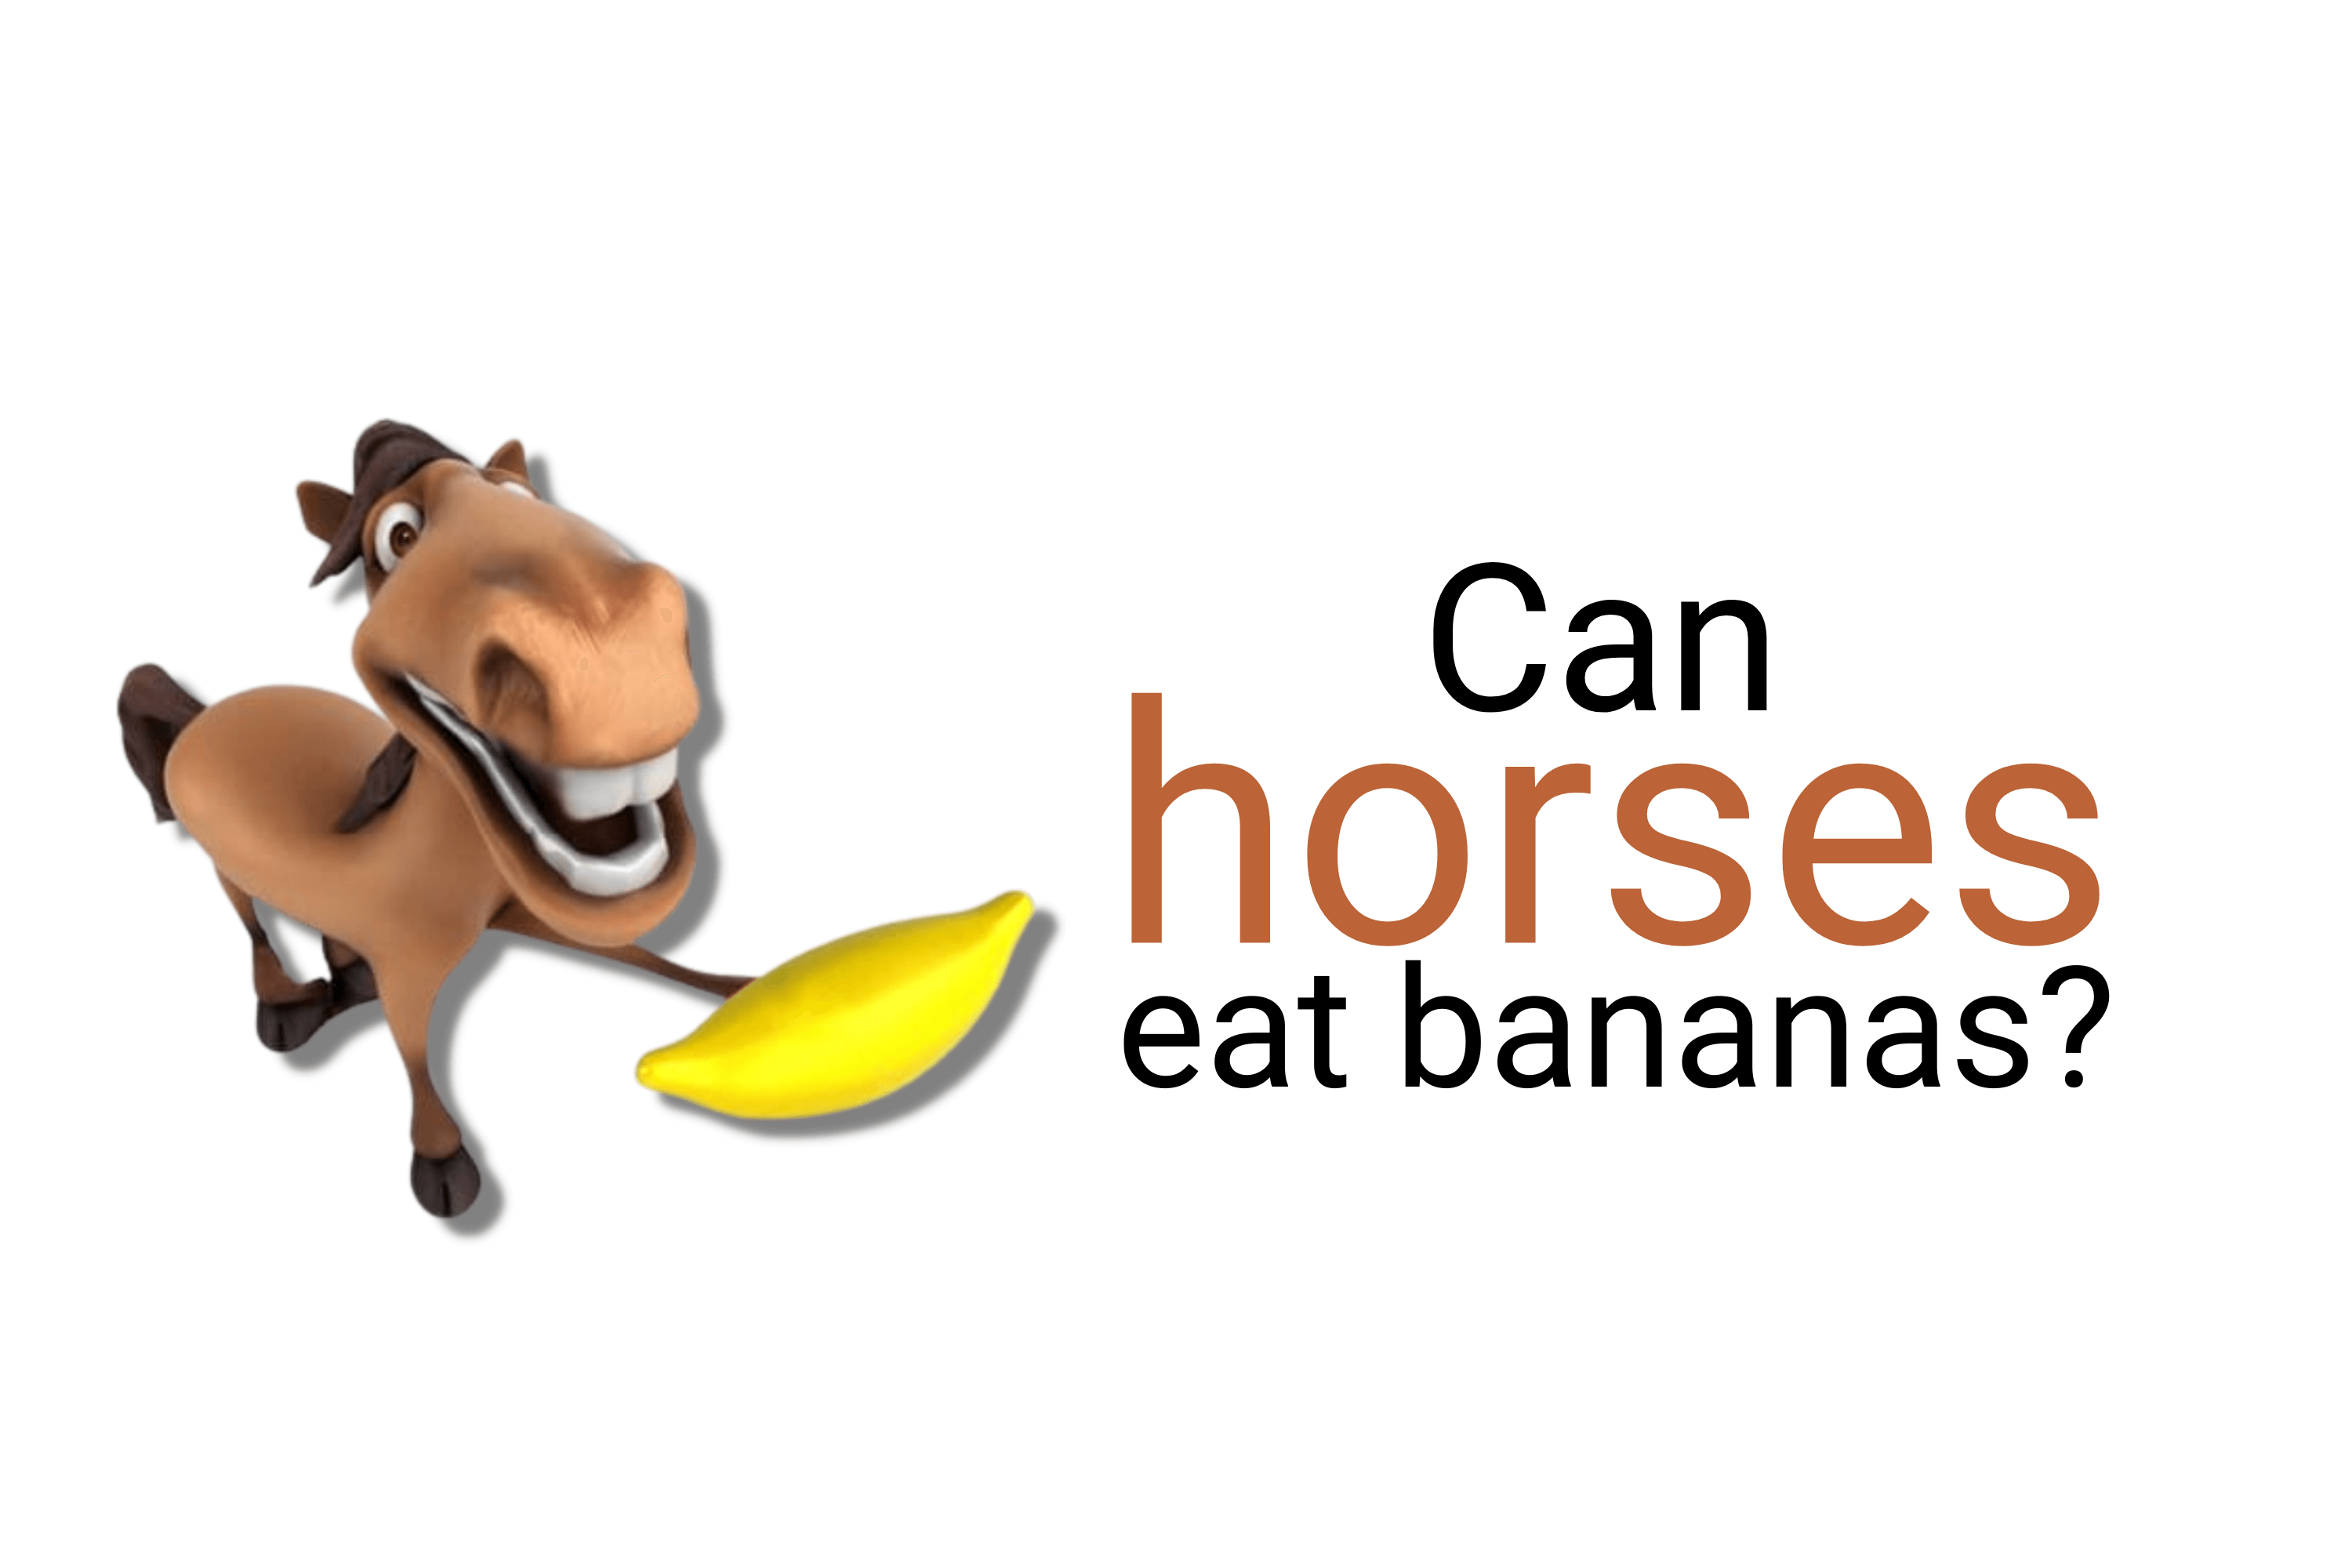 Can horses eat bananas?